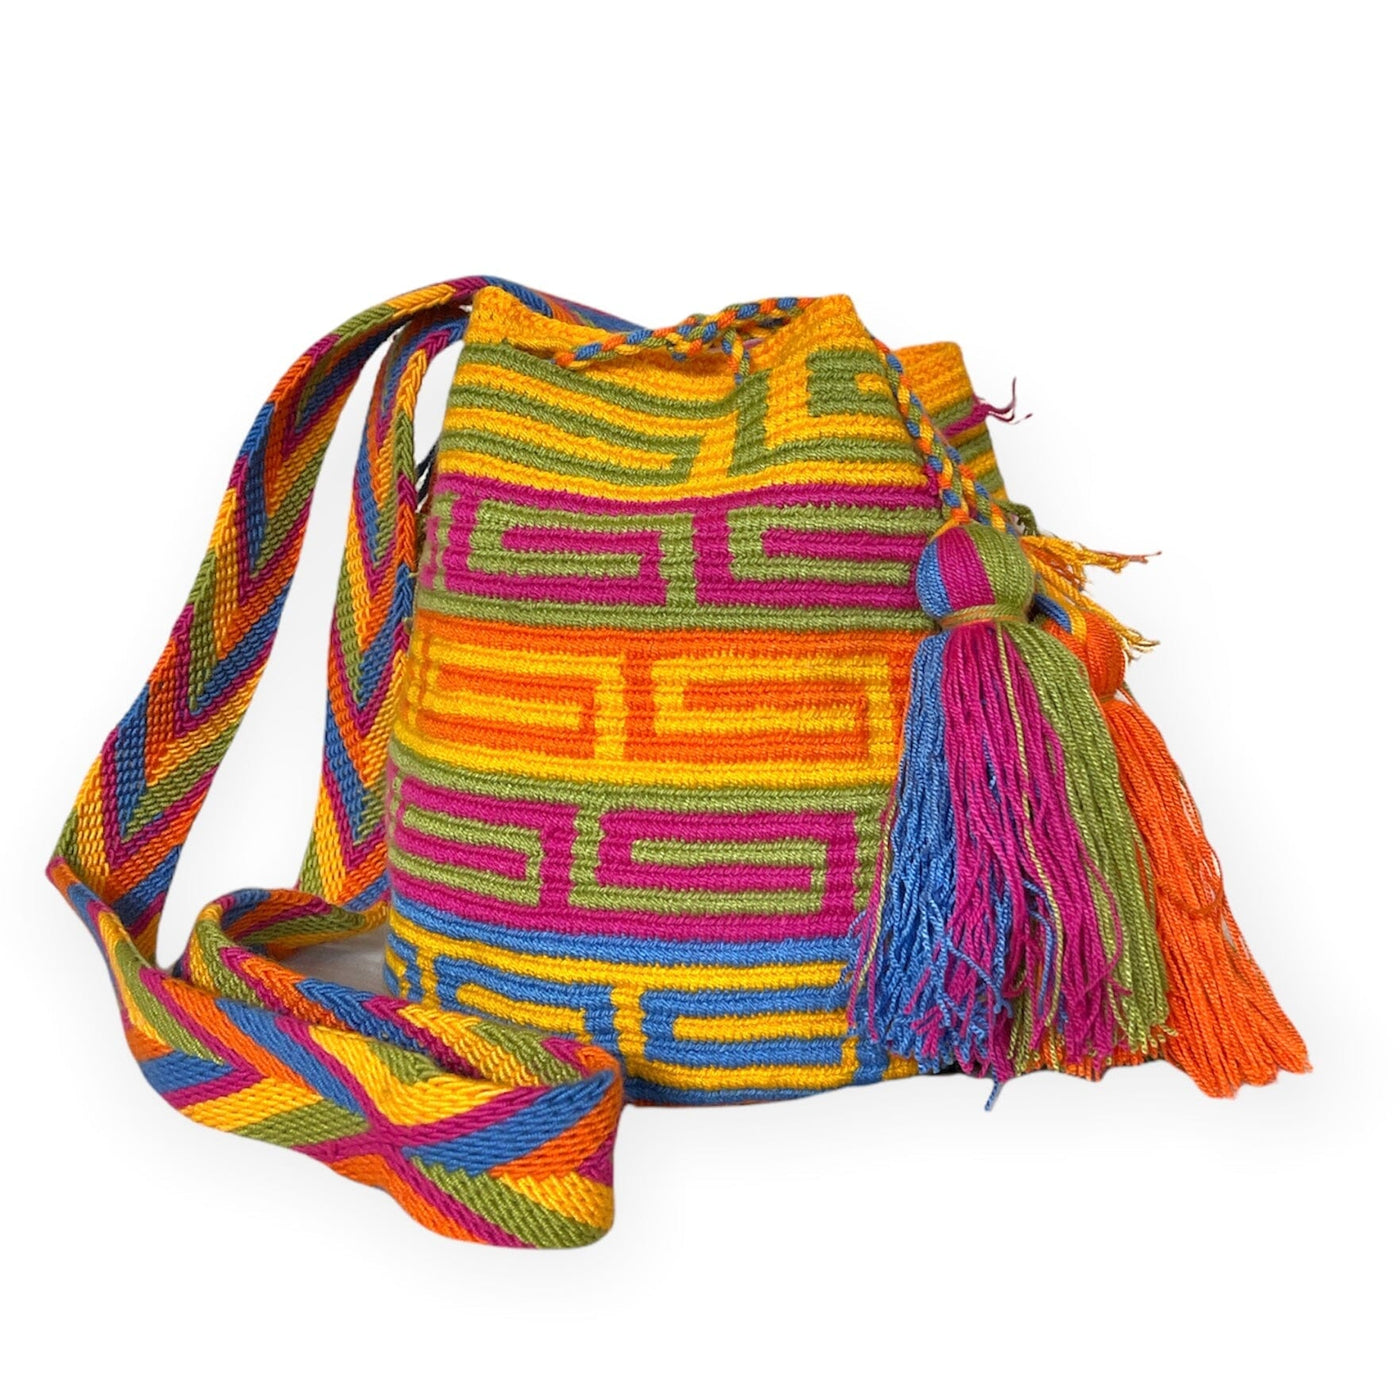 Greek Crochet Pattern | Summer Crossbody Bags | Casual Boho Bags for Summer | Teenage Purses | Colorful 4U